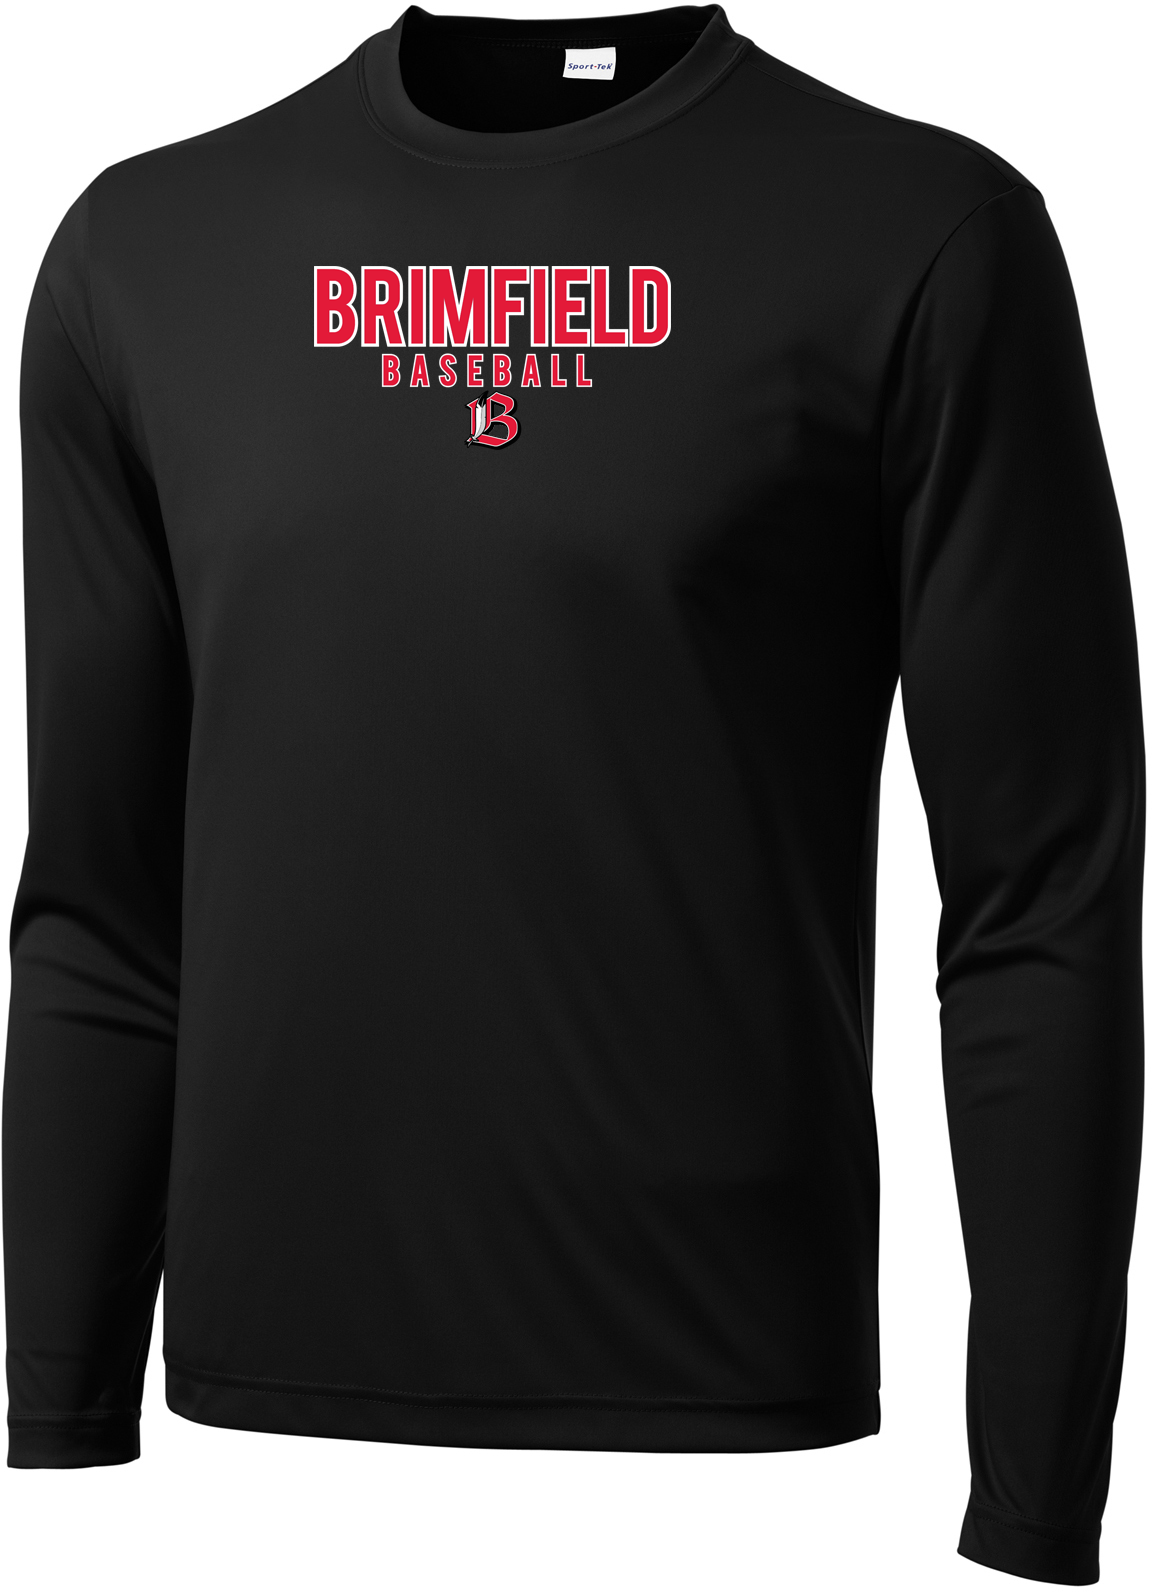 Brimfield Long Sleeve Performance Shirt